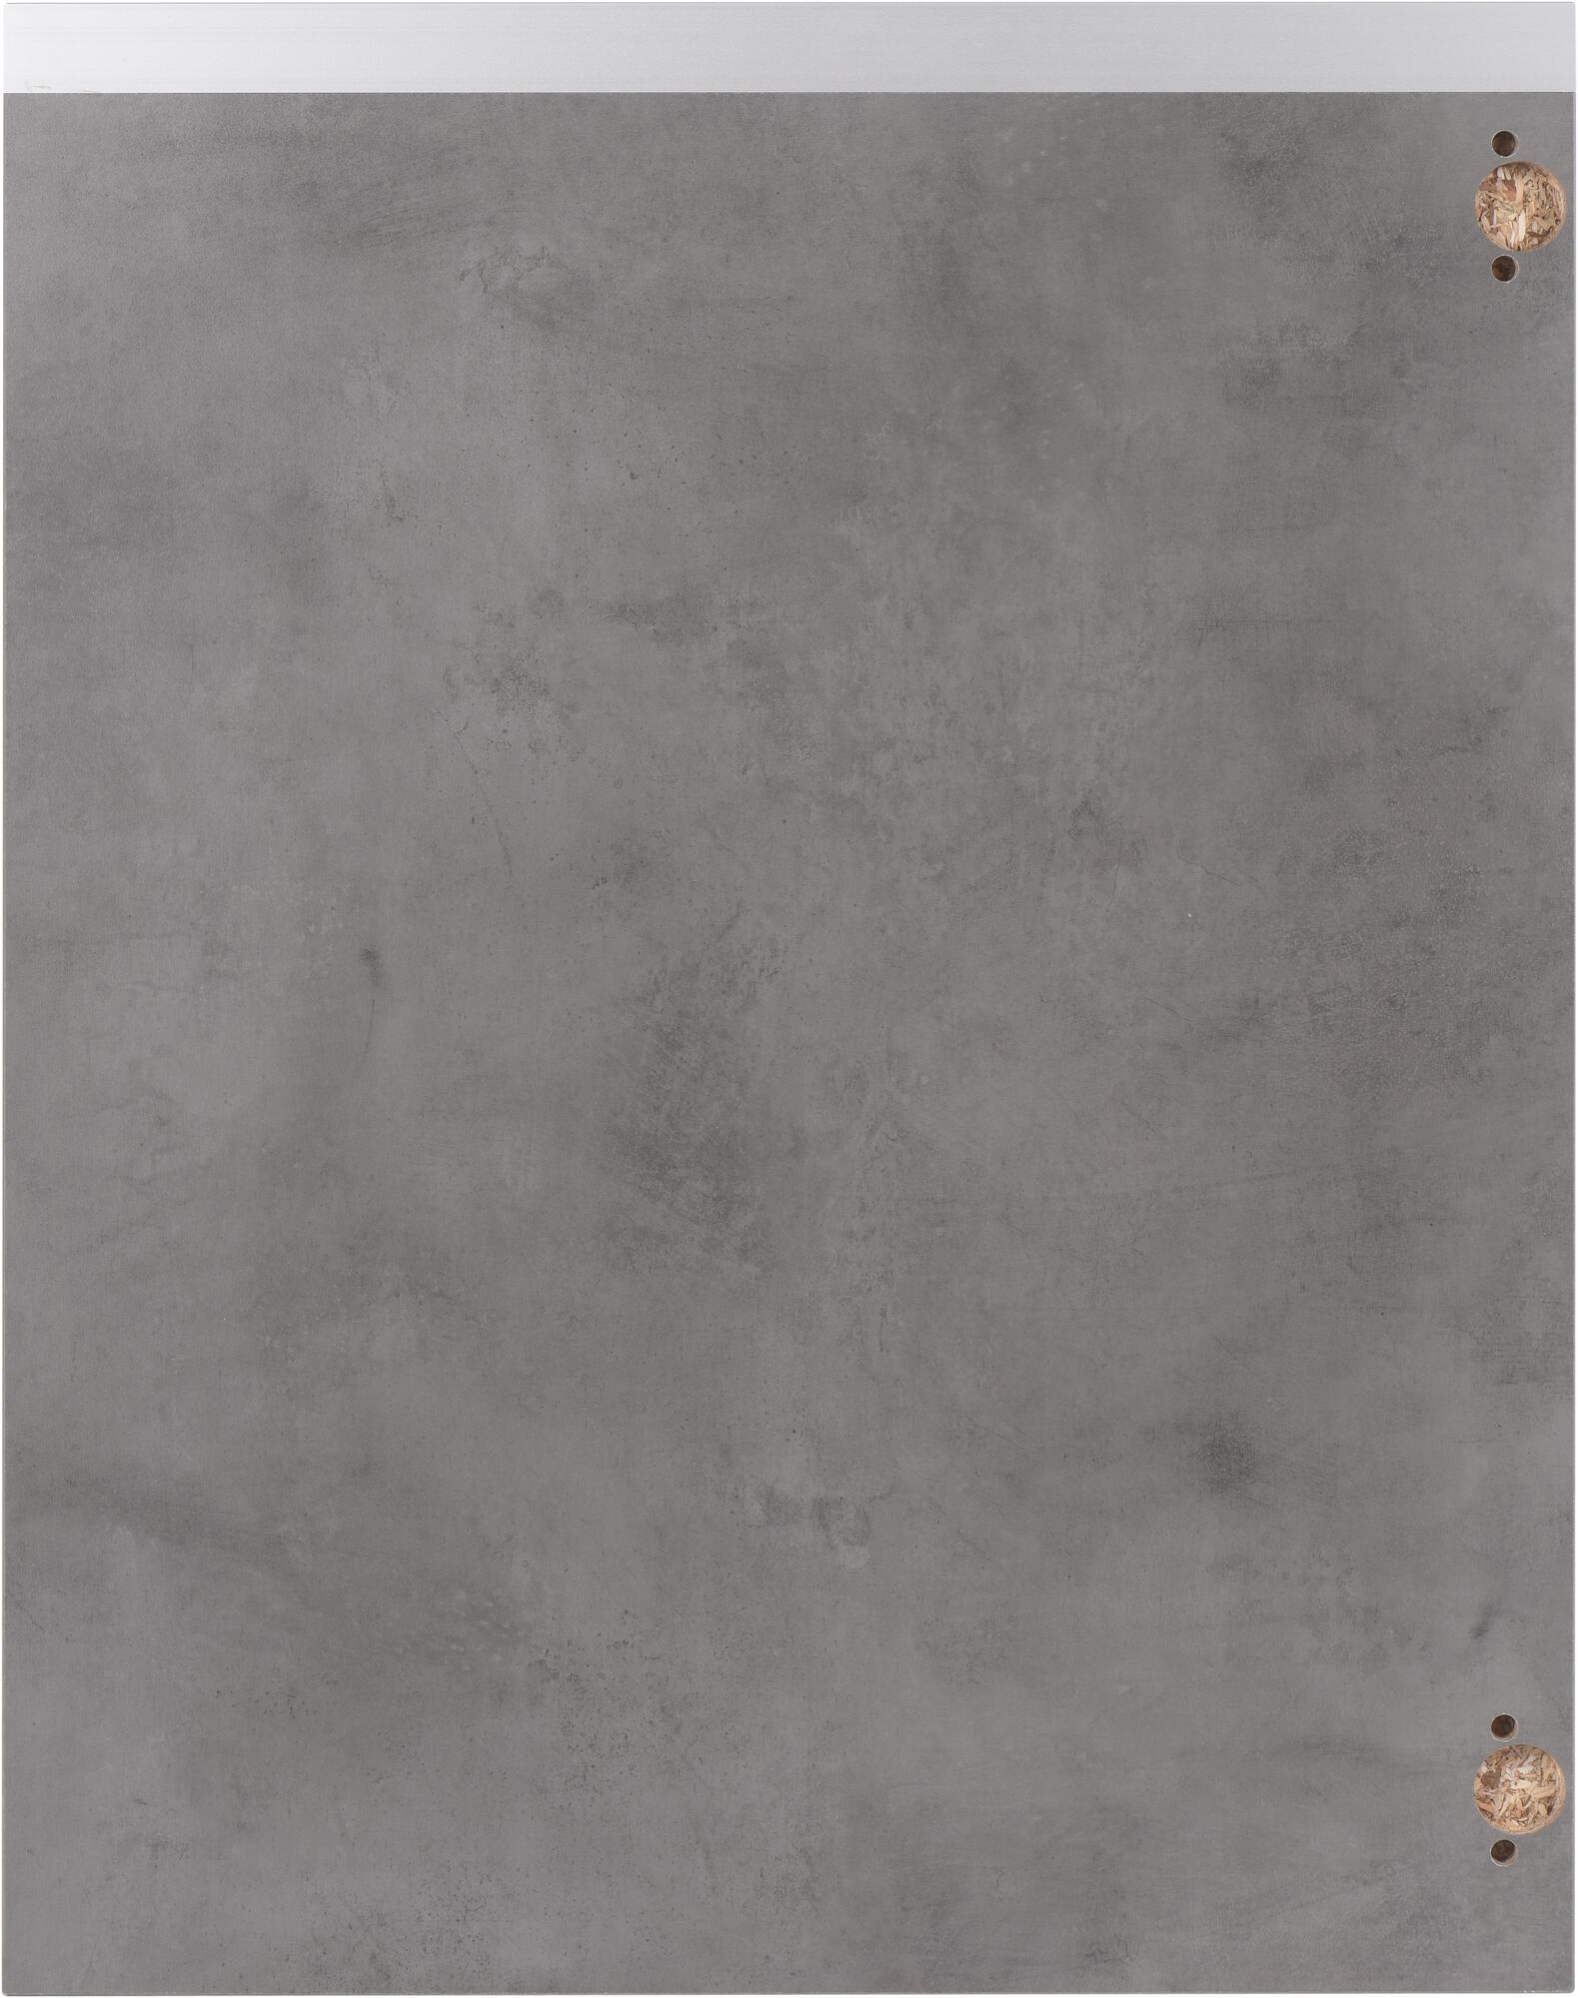 Puerta mueble de cocina mikonos cemento oscuro 59,7x76,5 cm